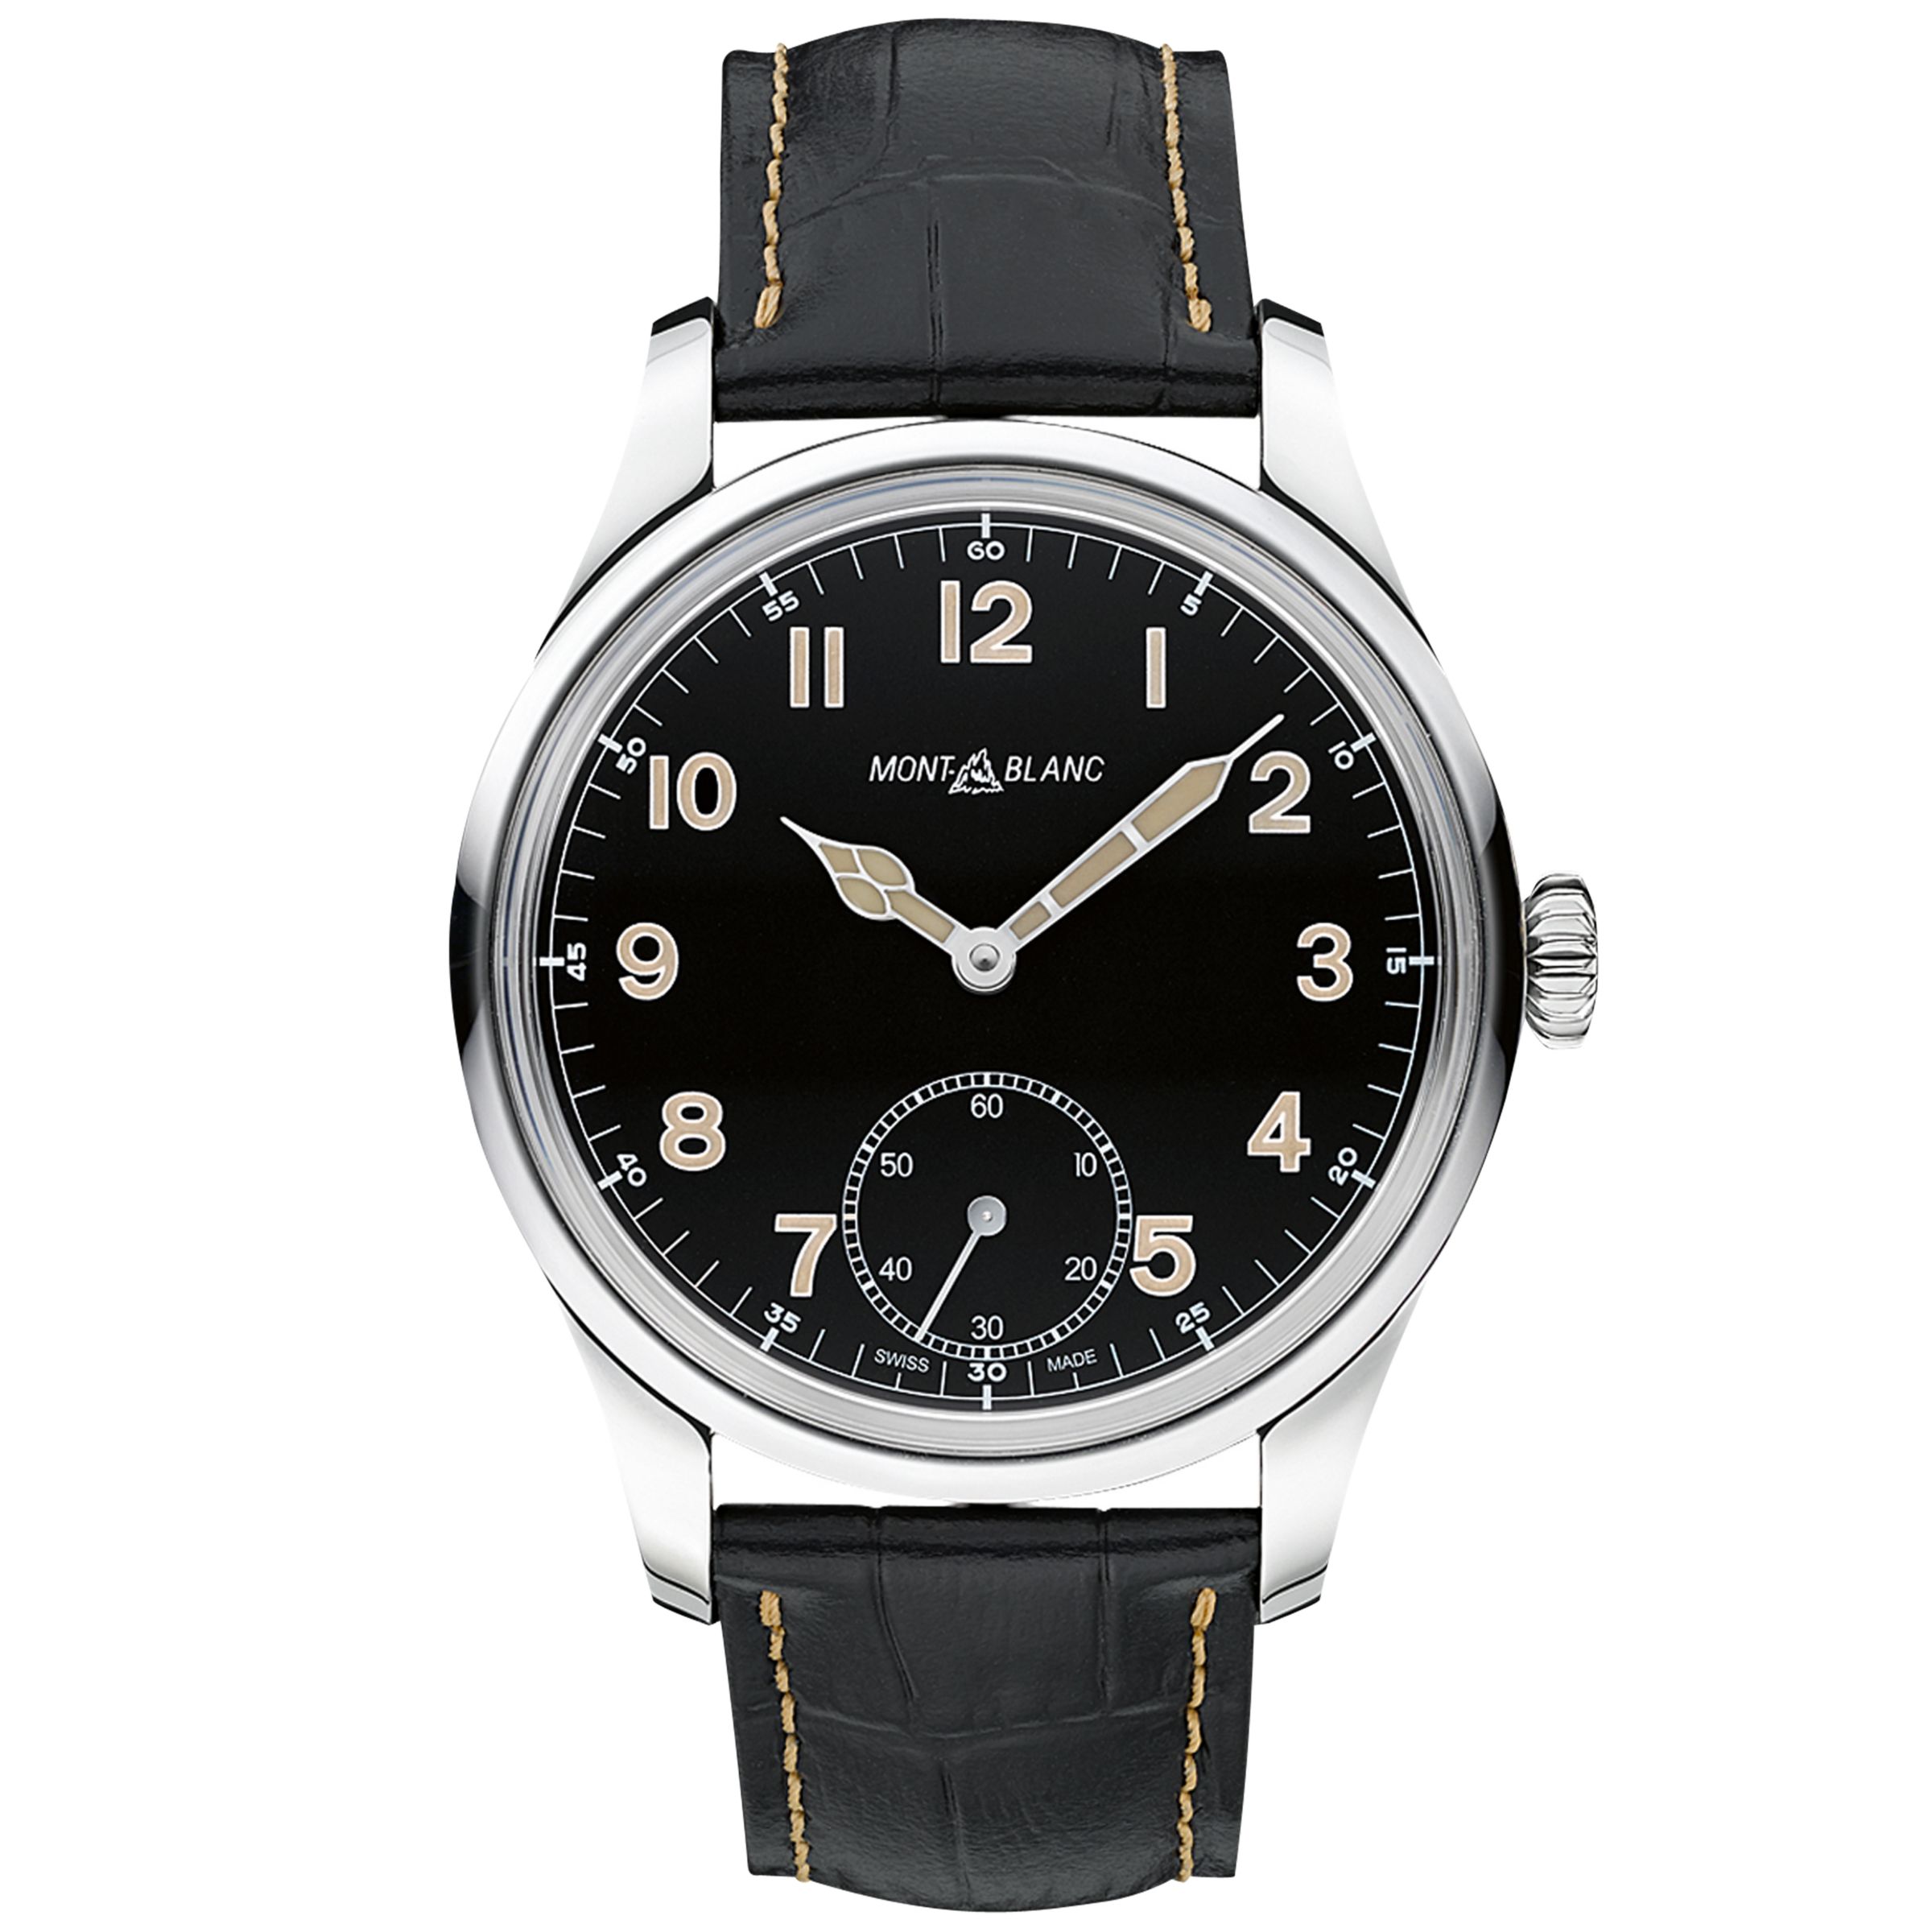 Montblanc 113860 Men's 1858 Leather Strap Watch, Black